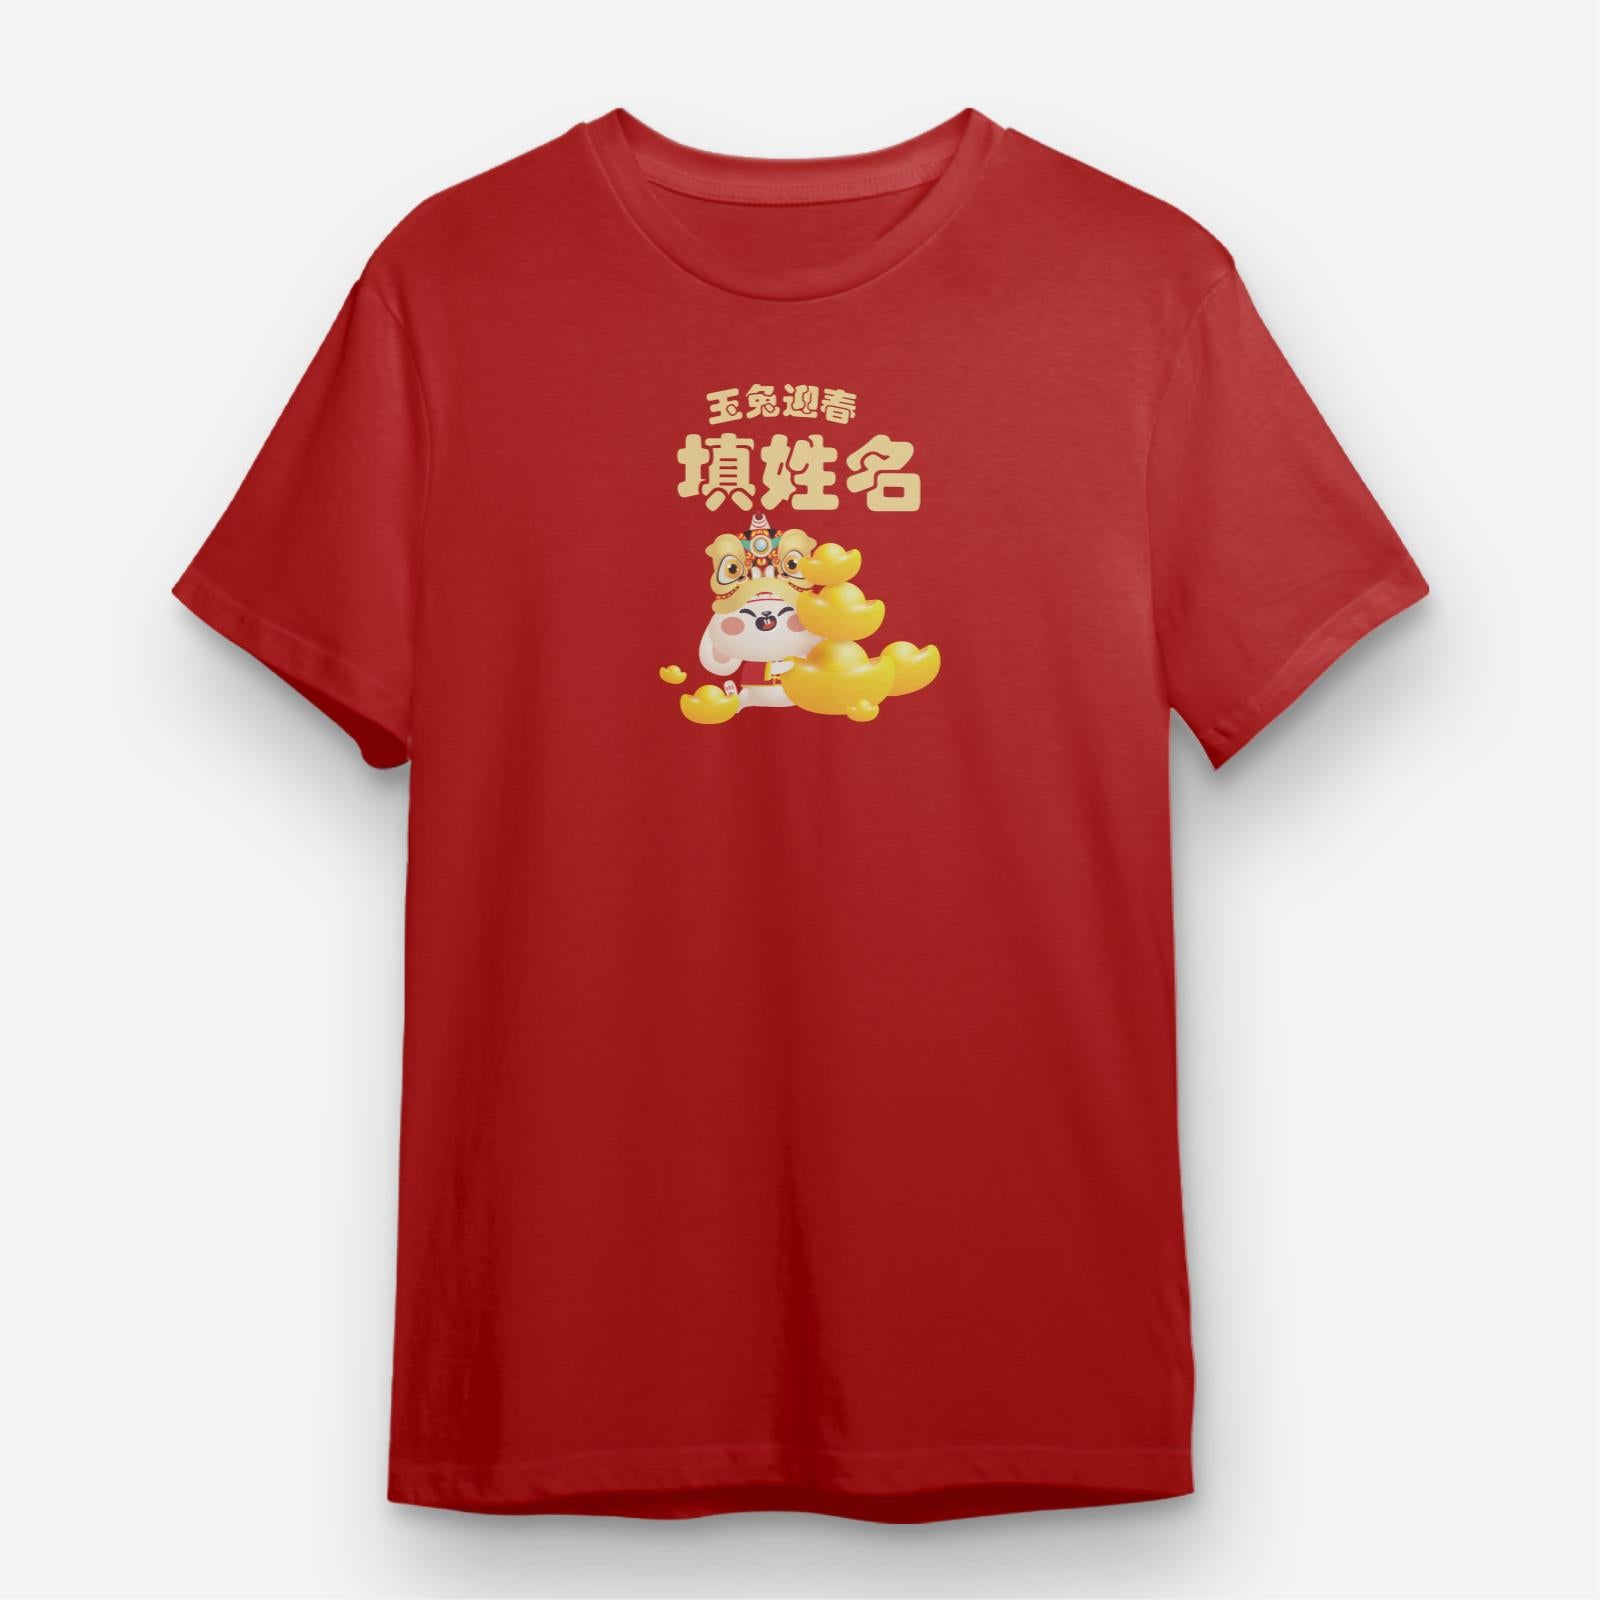 Cny Rabbit Family - Baby Rabbit Unisex Tee Shirt with Chinese Personalization